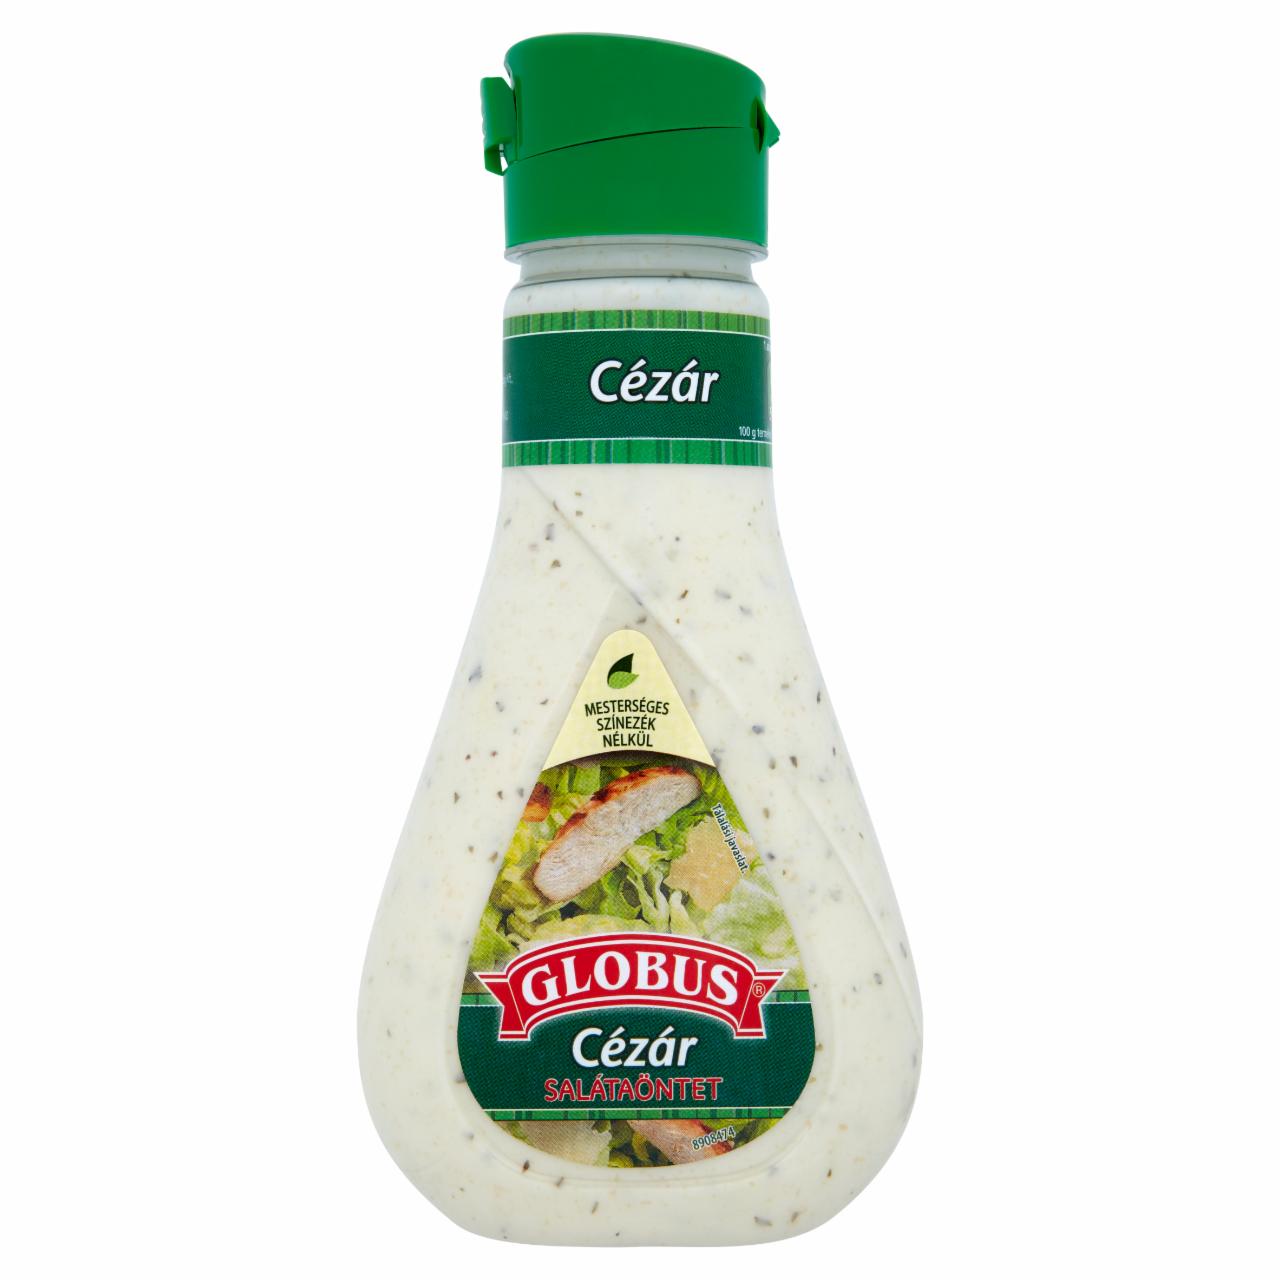 Képek - Globus Cézár salátaöntet 236 g